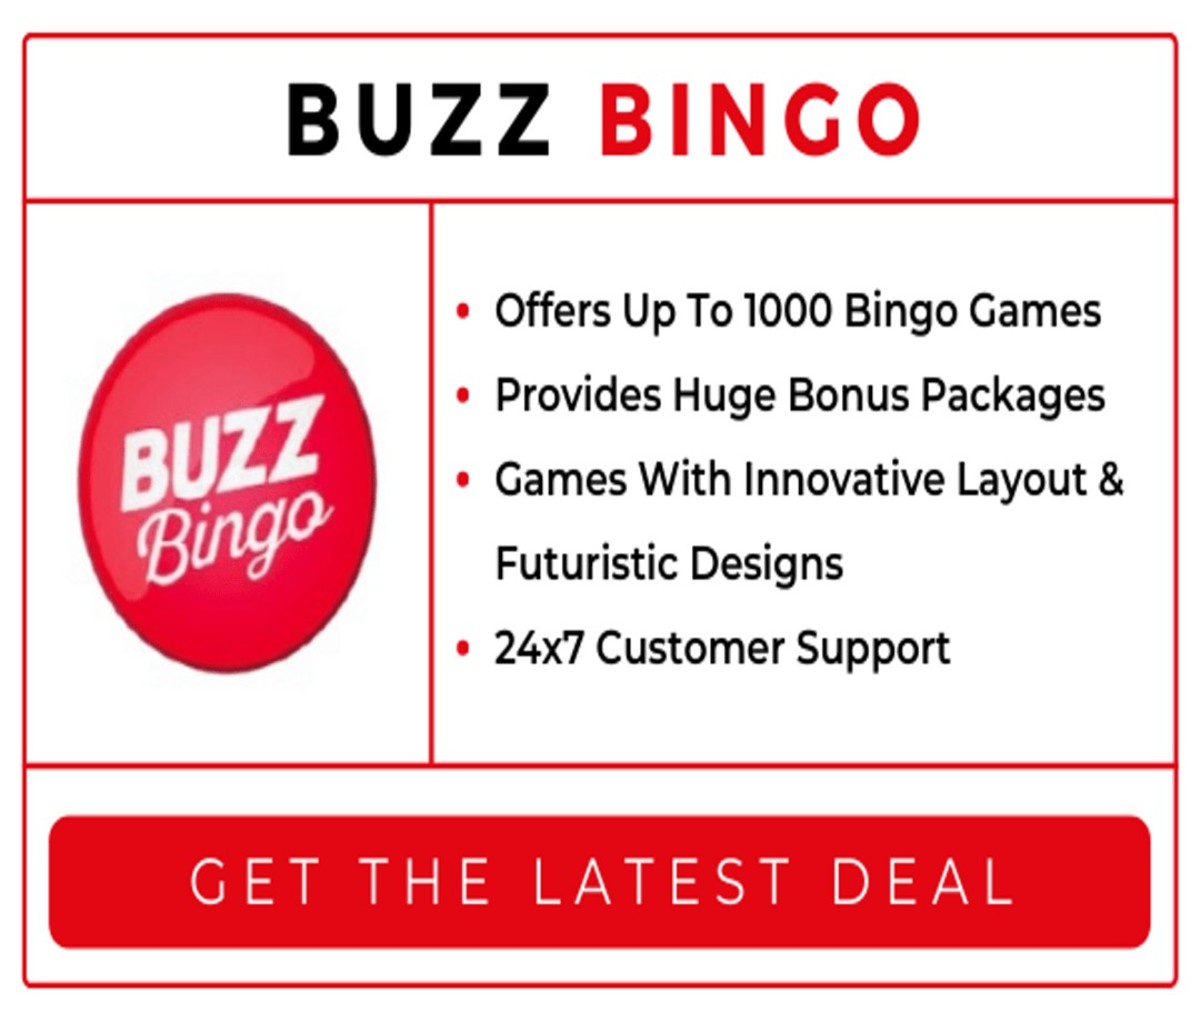 Buzz Bingo - Popular Bingo Site To Play Fun Games & Make Money